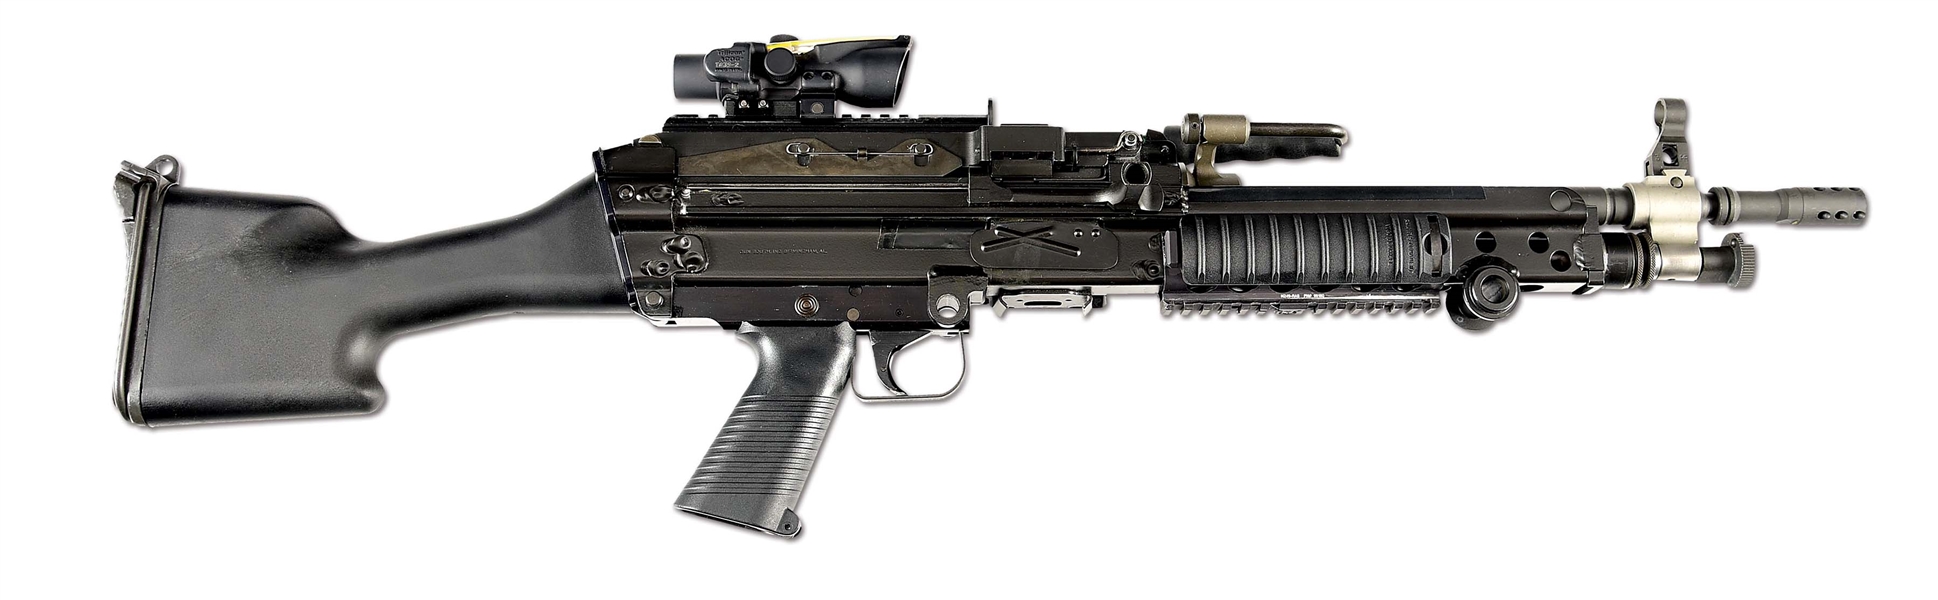 (N) FABRIQUE NATIONALE FN MINIMI LIGHT MACHINE GUN WITH TRIJICON ACOG OPTIC (PRE-86 DEALER SAMPLE).